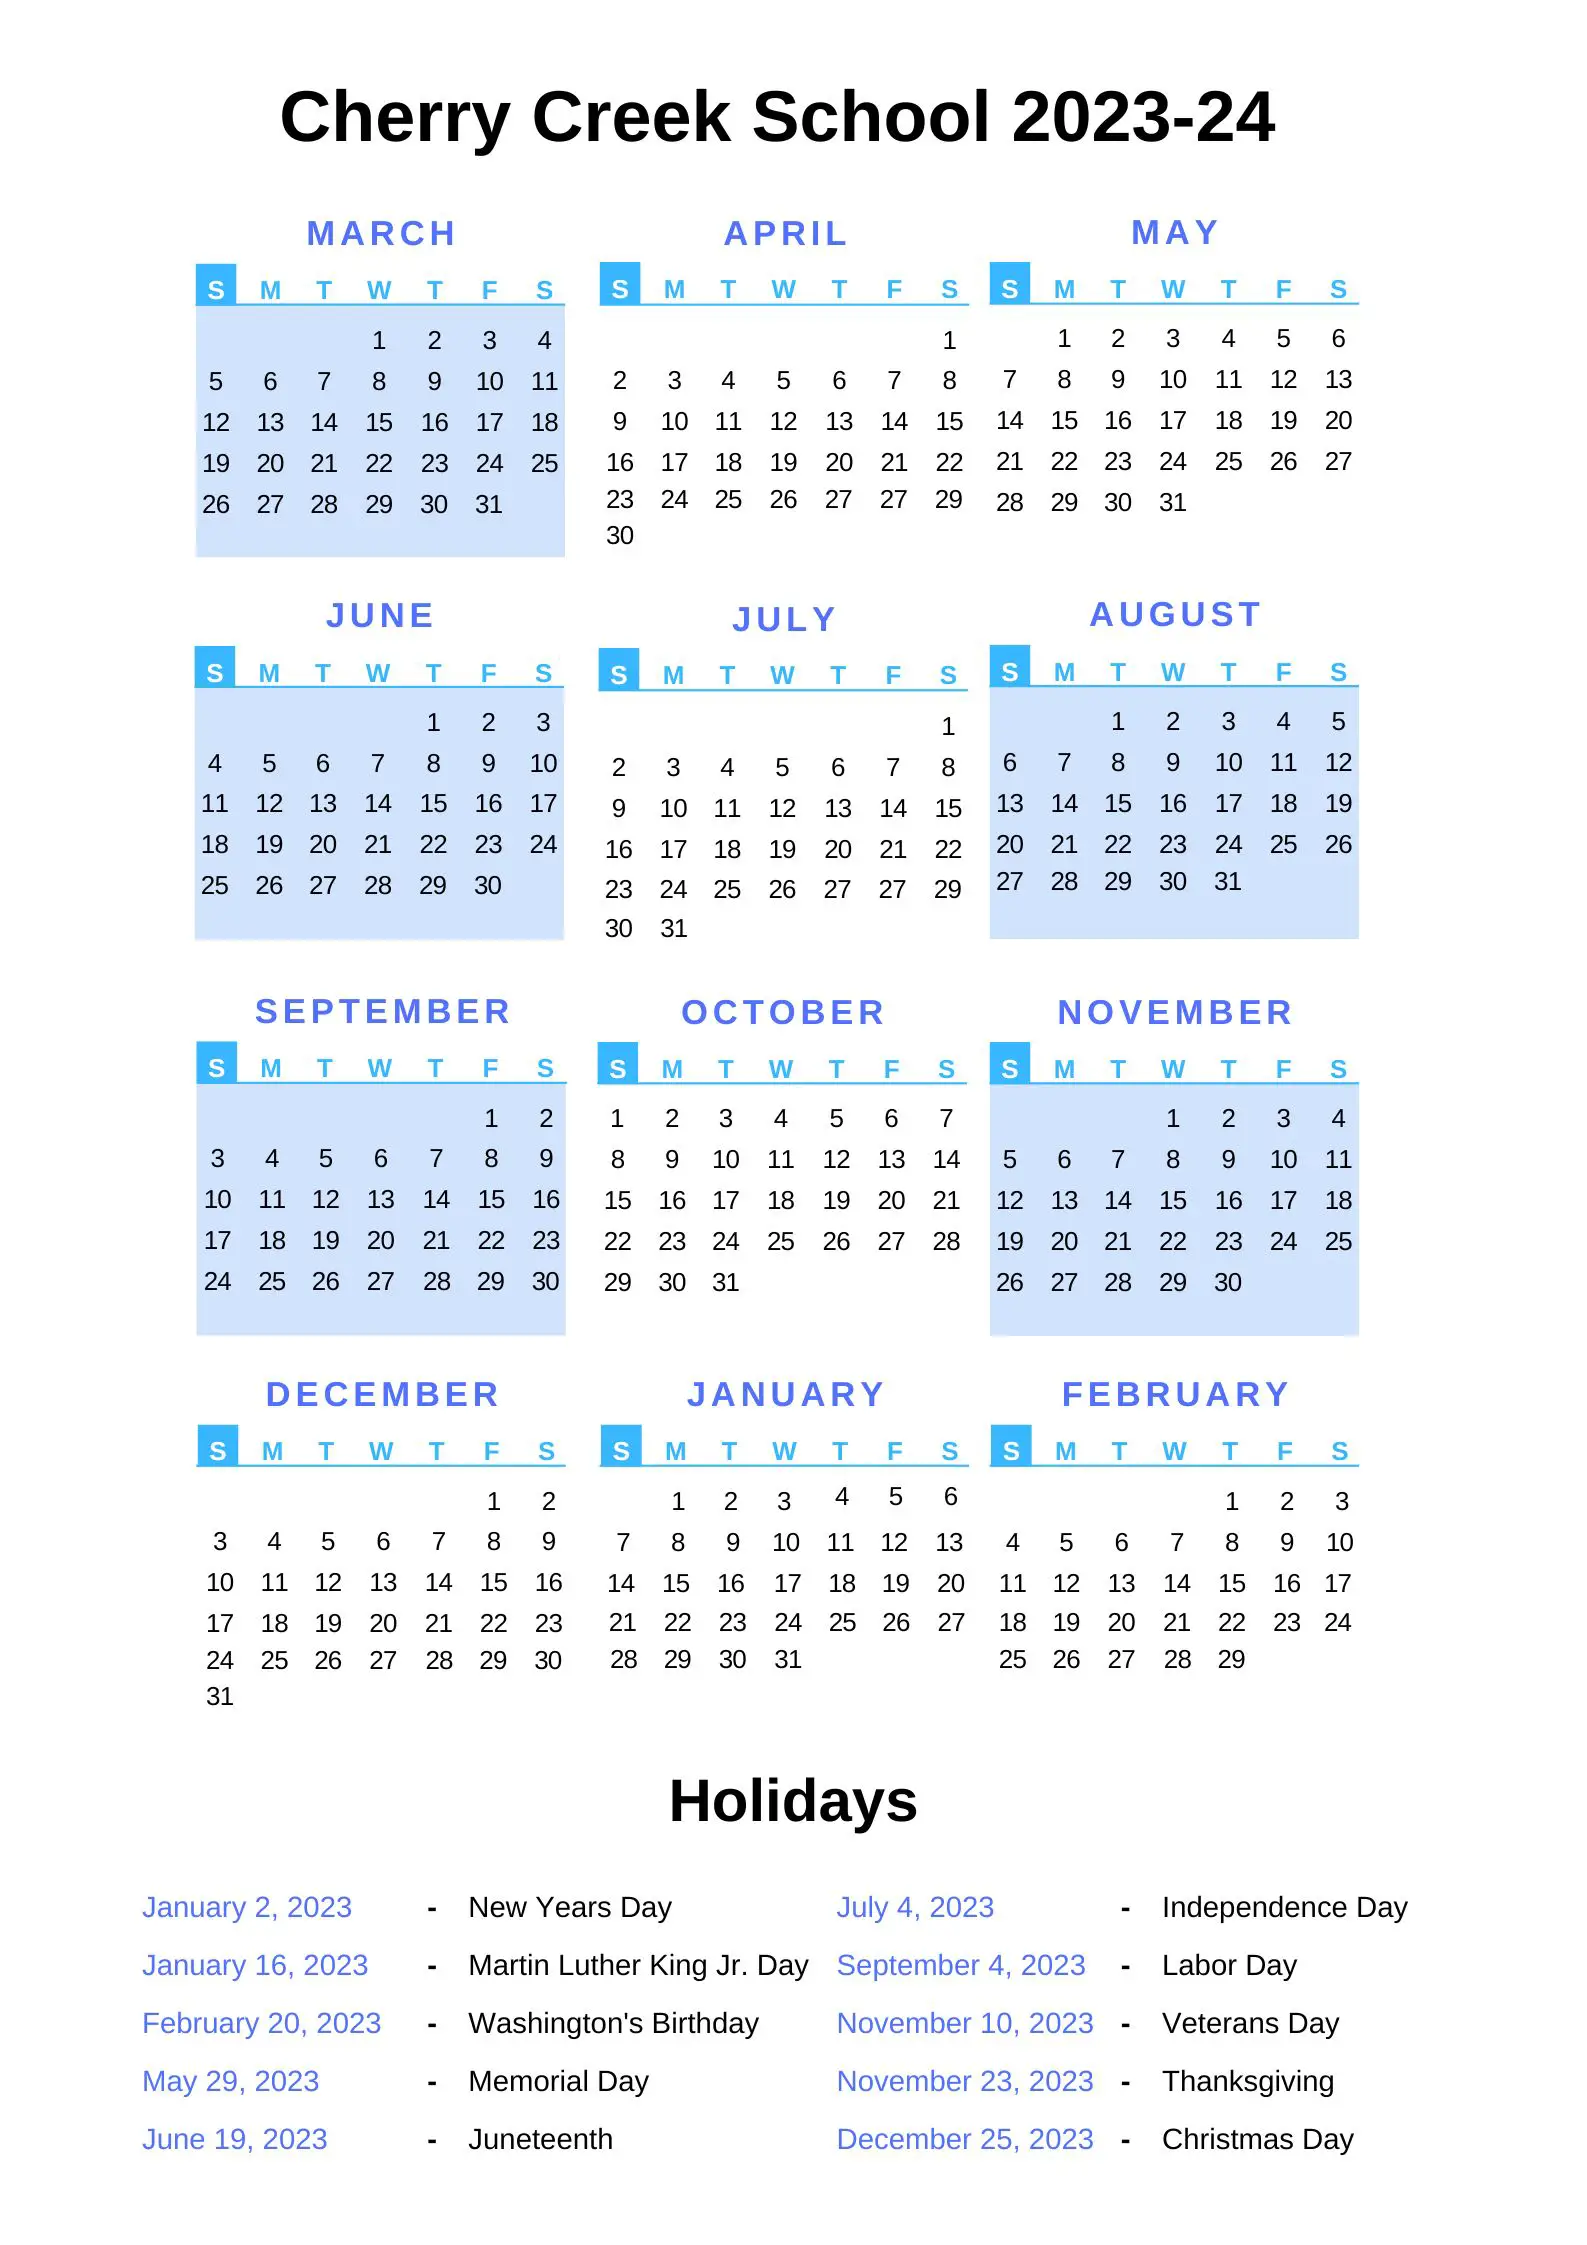 Cherry Creek Schools Calendar [CCS] 202324 with Holidays